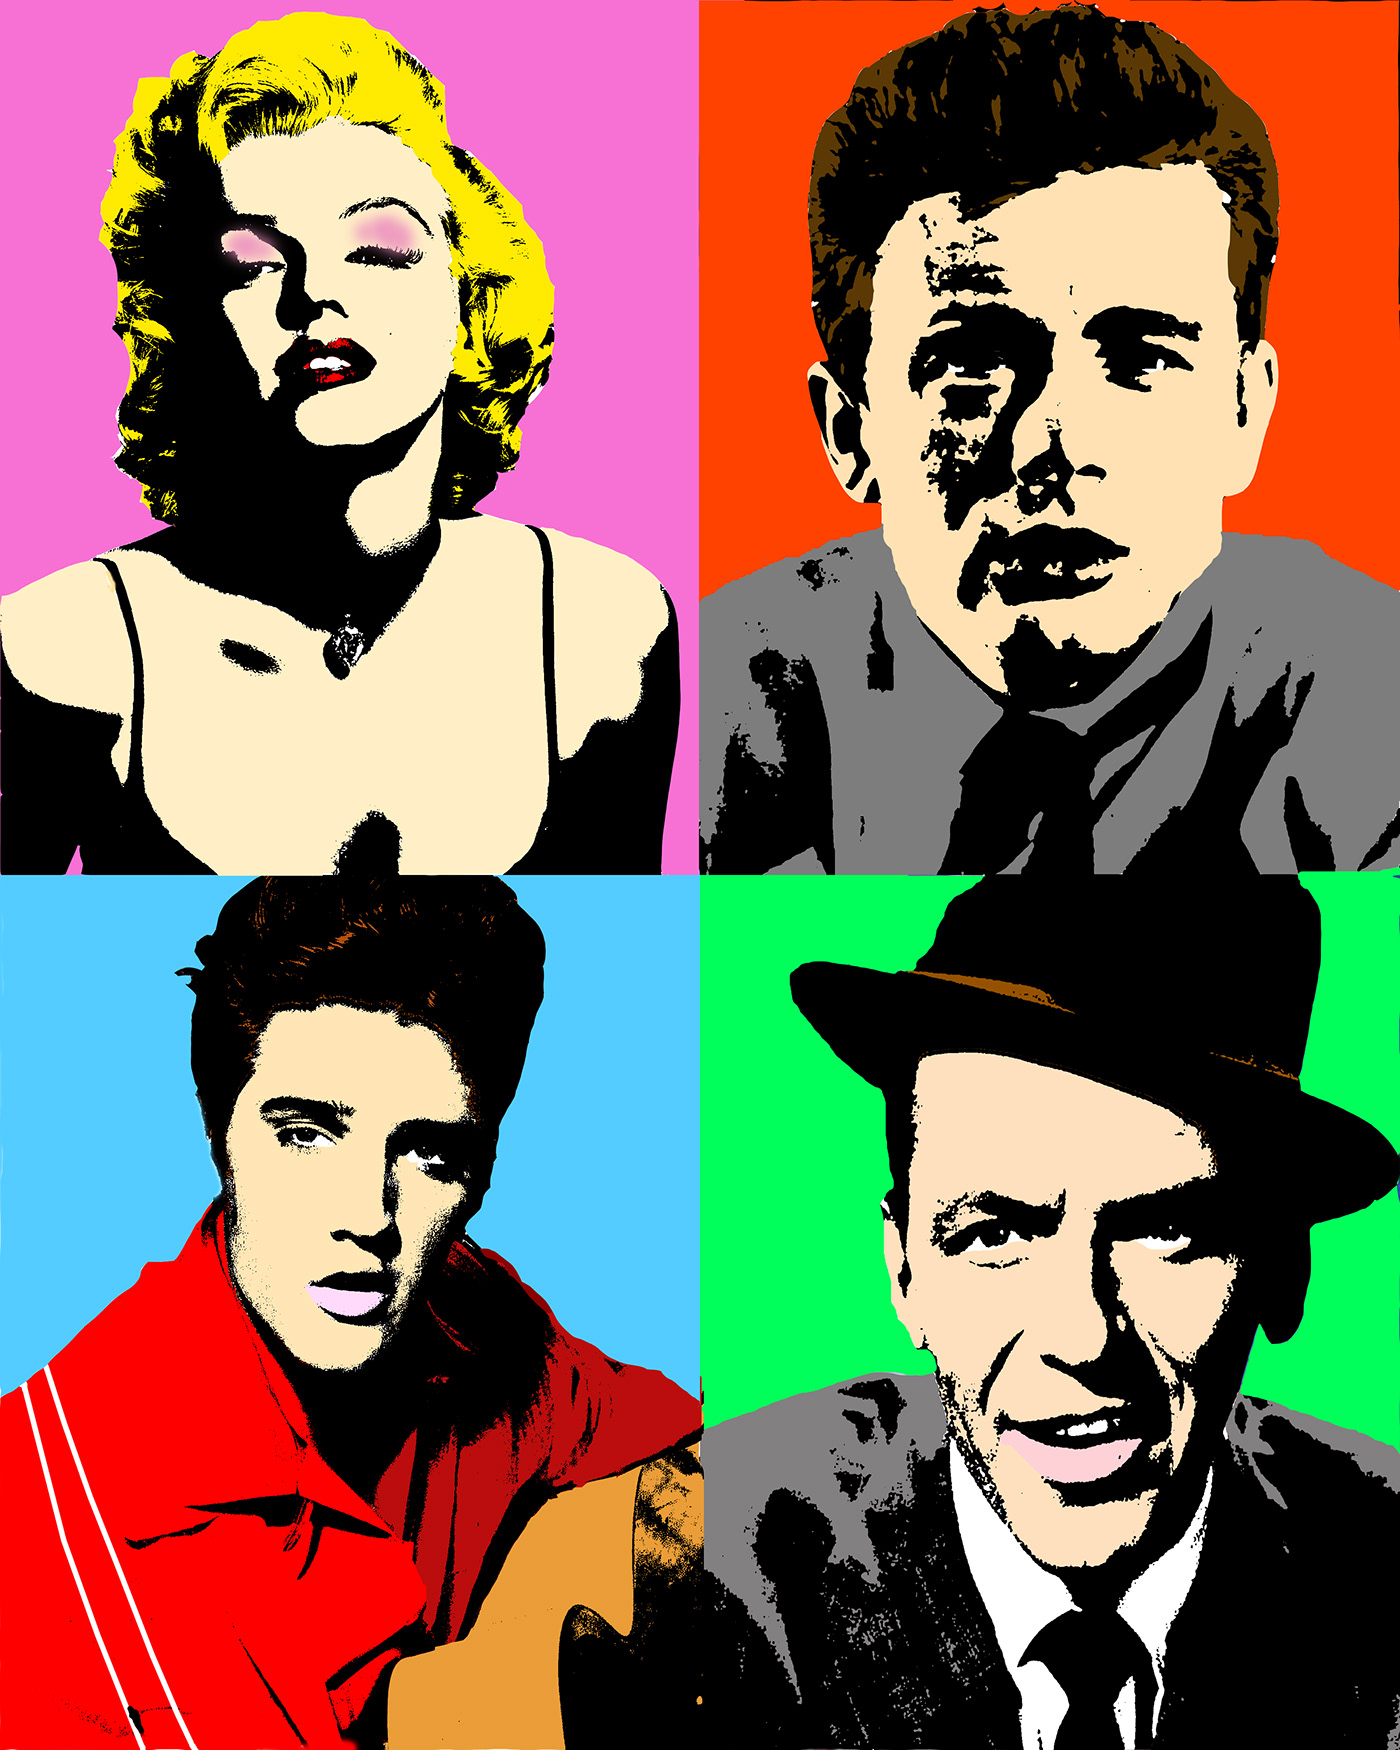 art marilyn monroe Martin frank elvis poster color 50s graphic Illustrator Singer Famous Celebrity tribute dean pop presley Sinatra